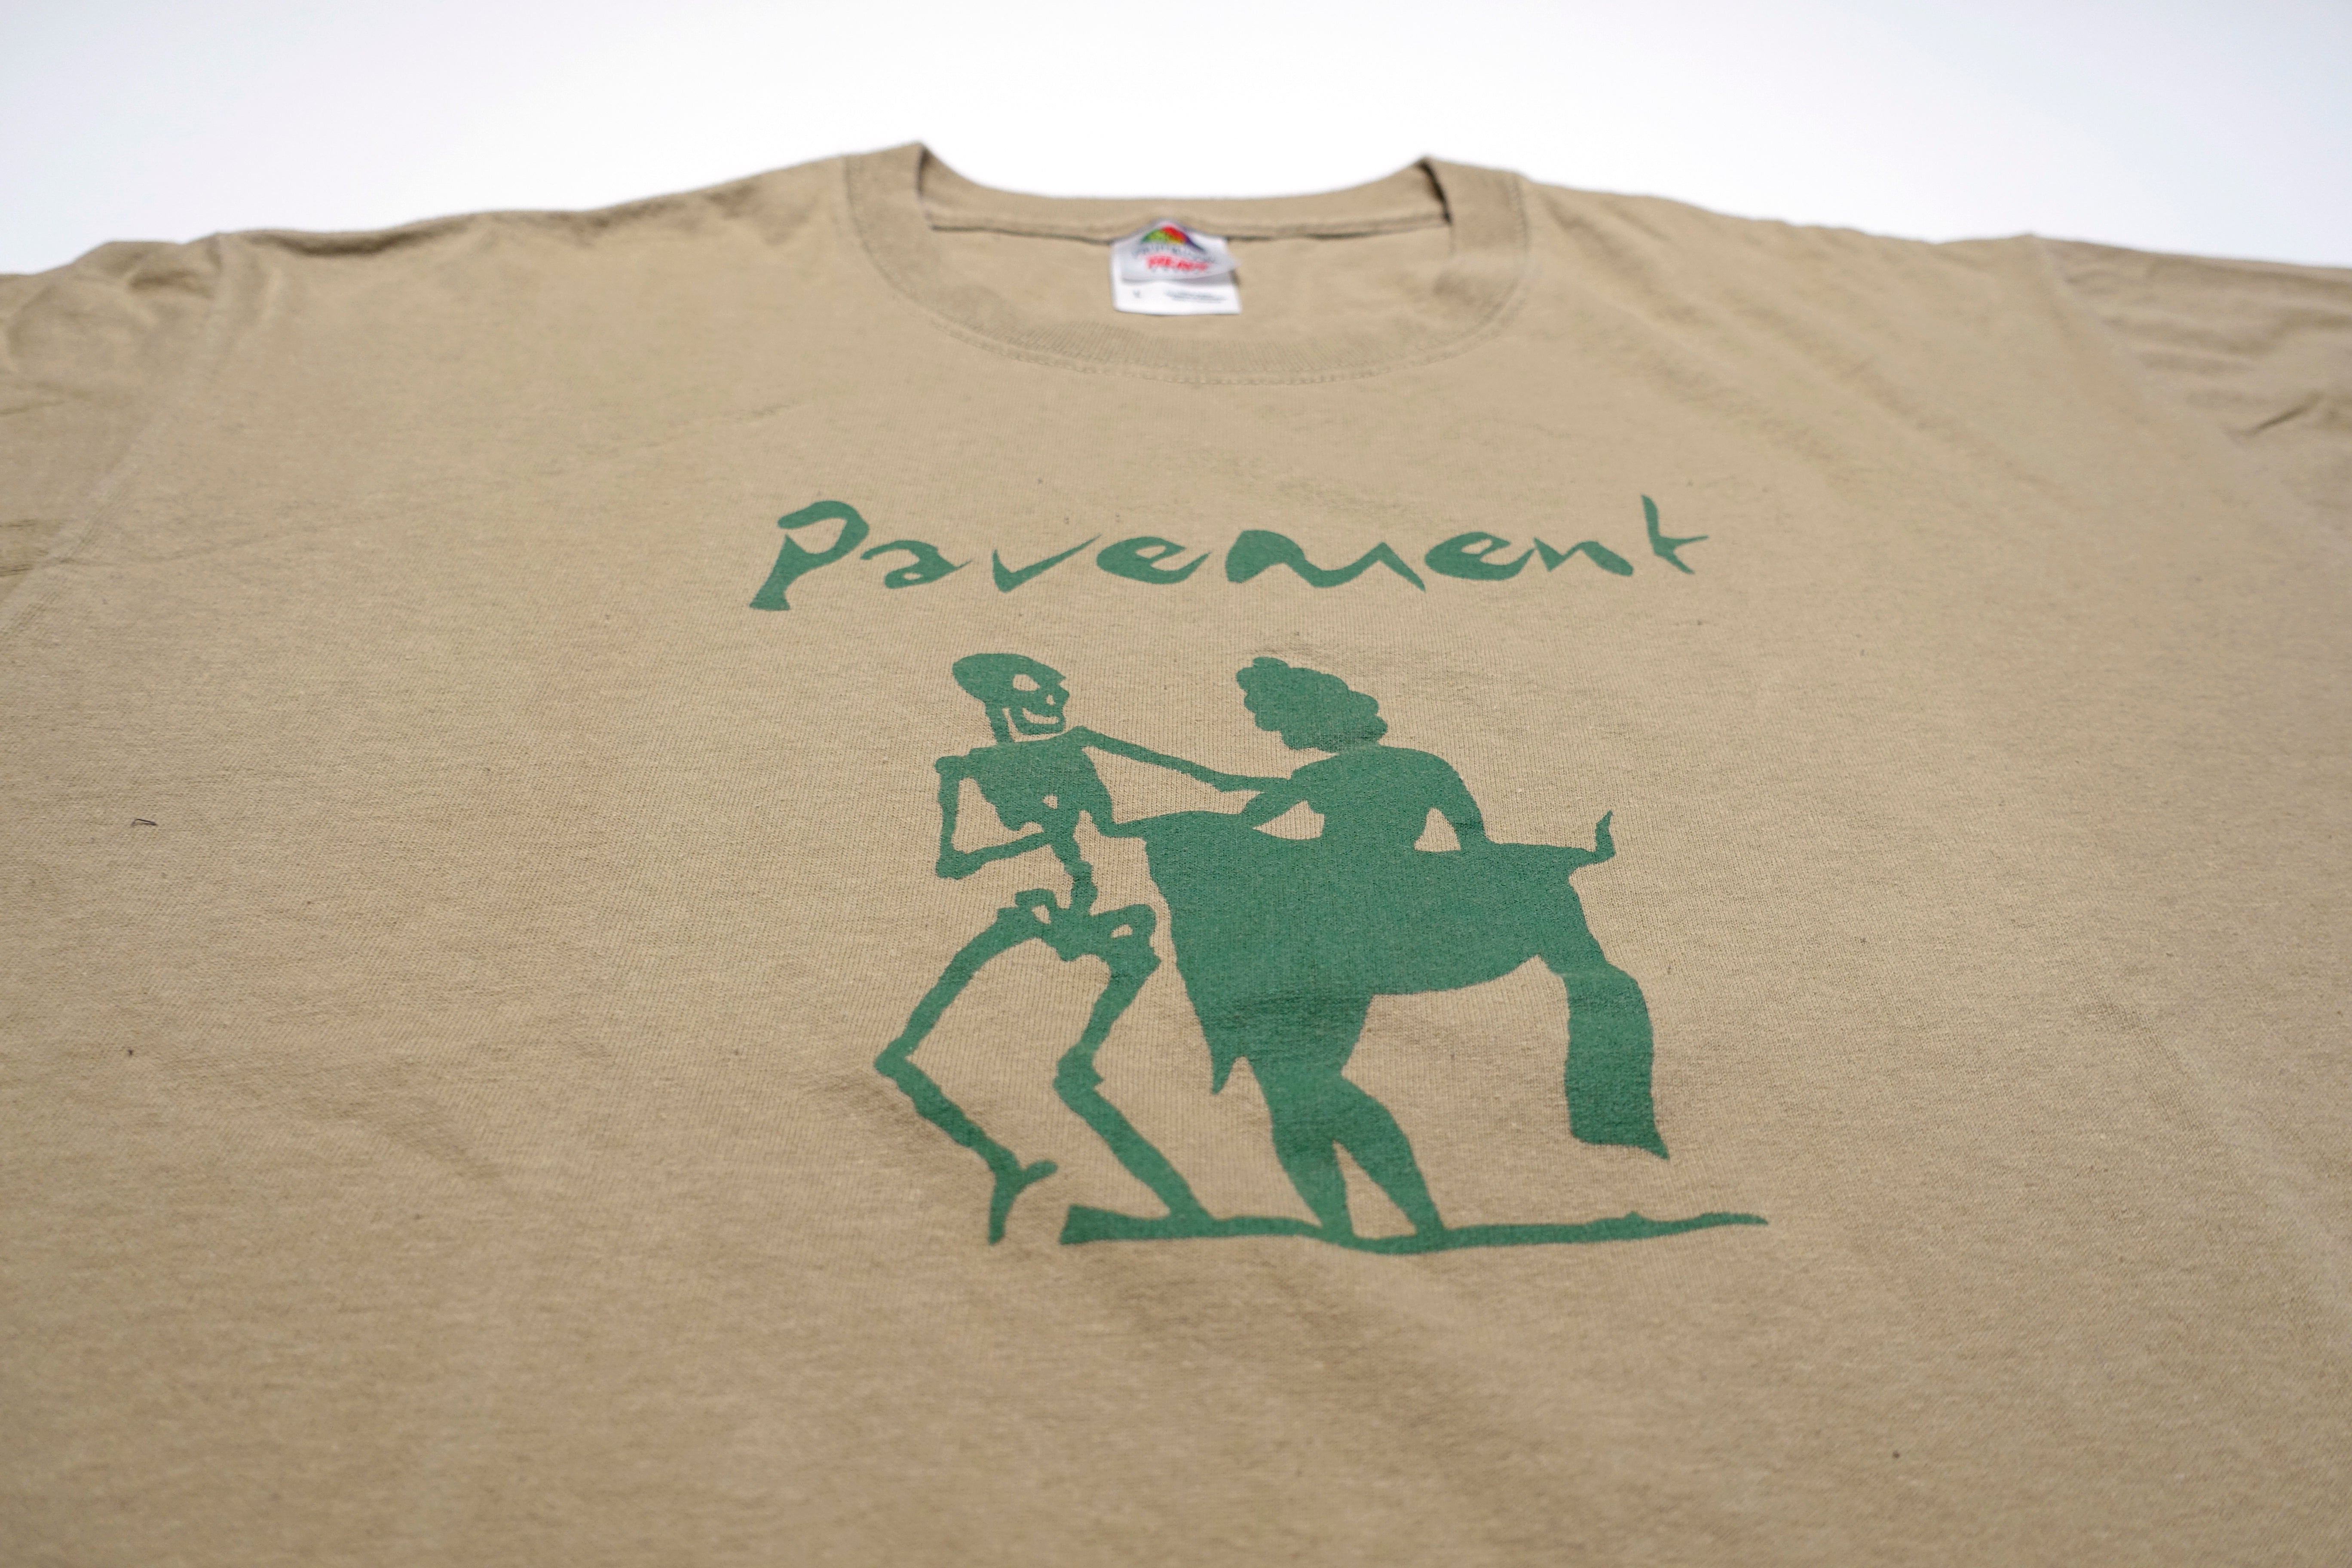 Pavement - Skeleton Dancer Tour Shirt Size Large